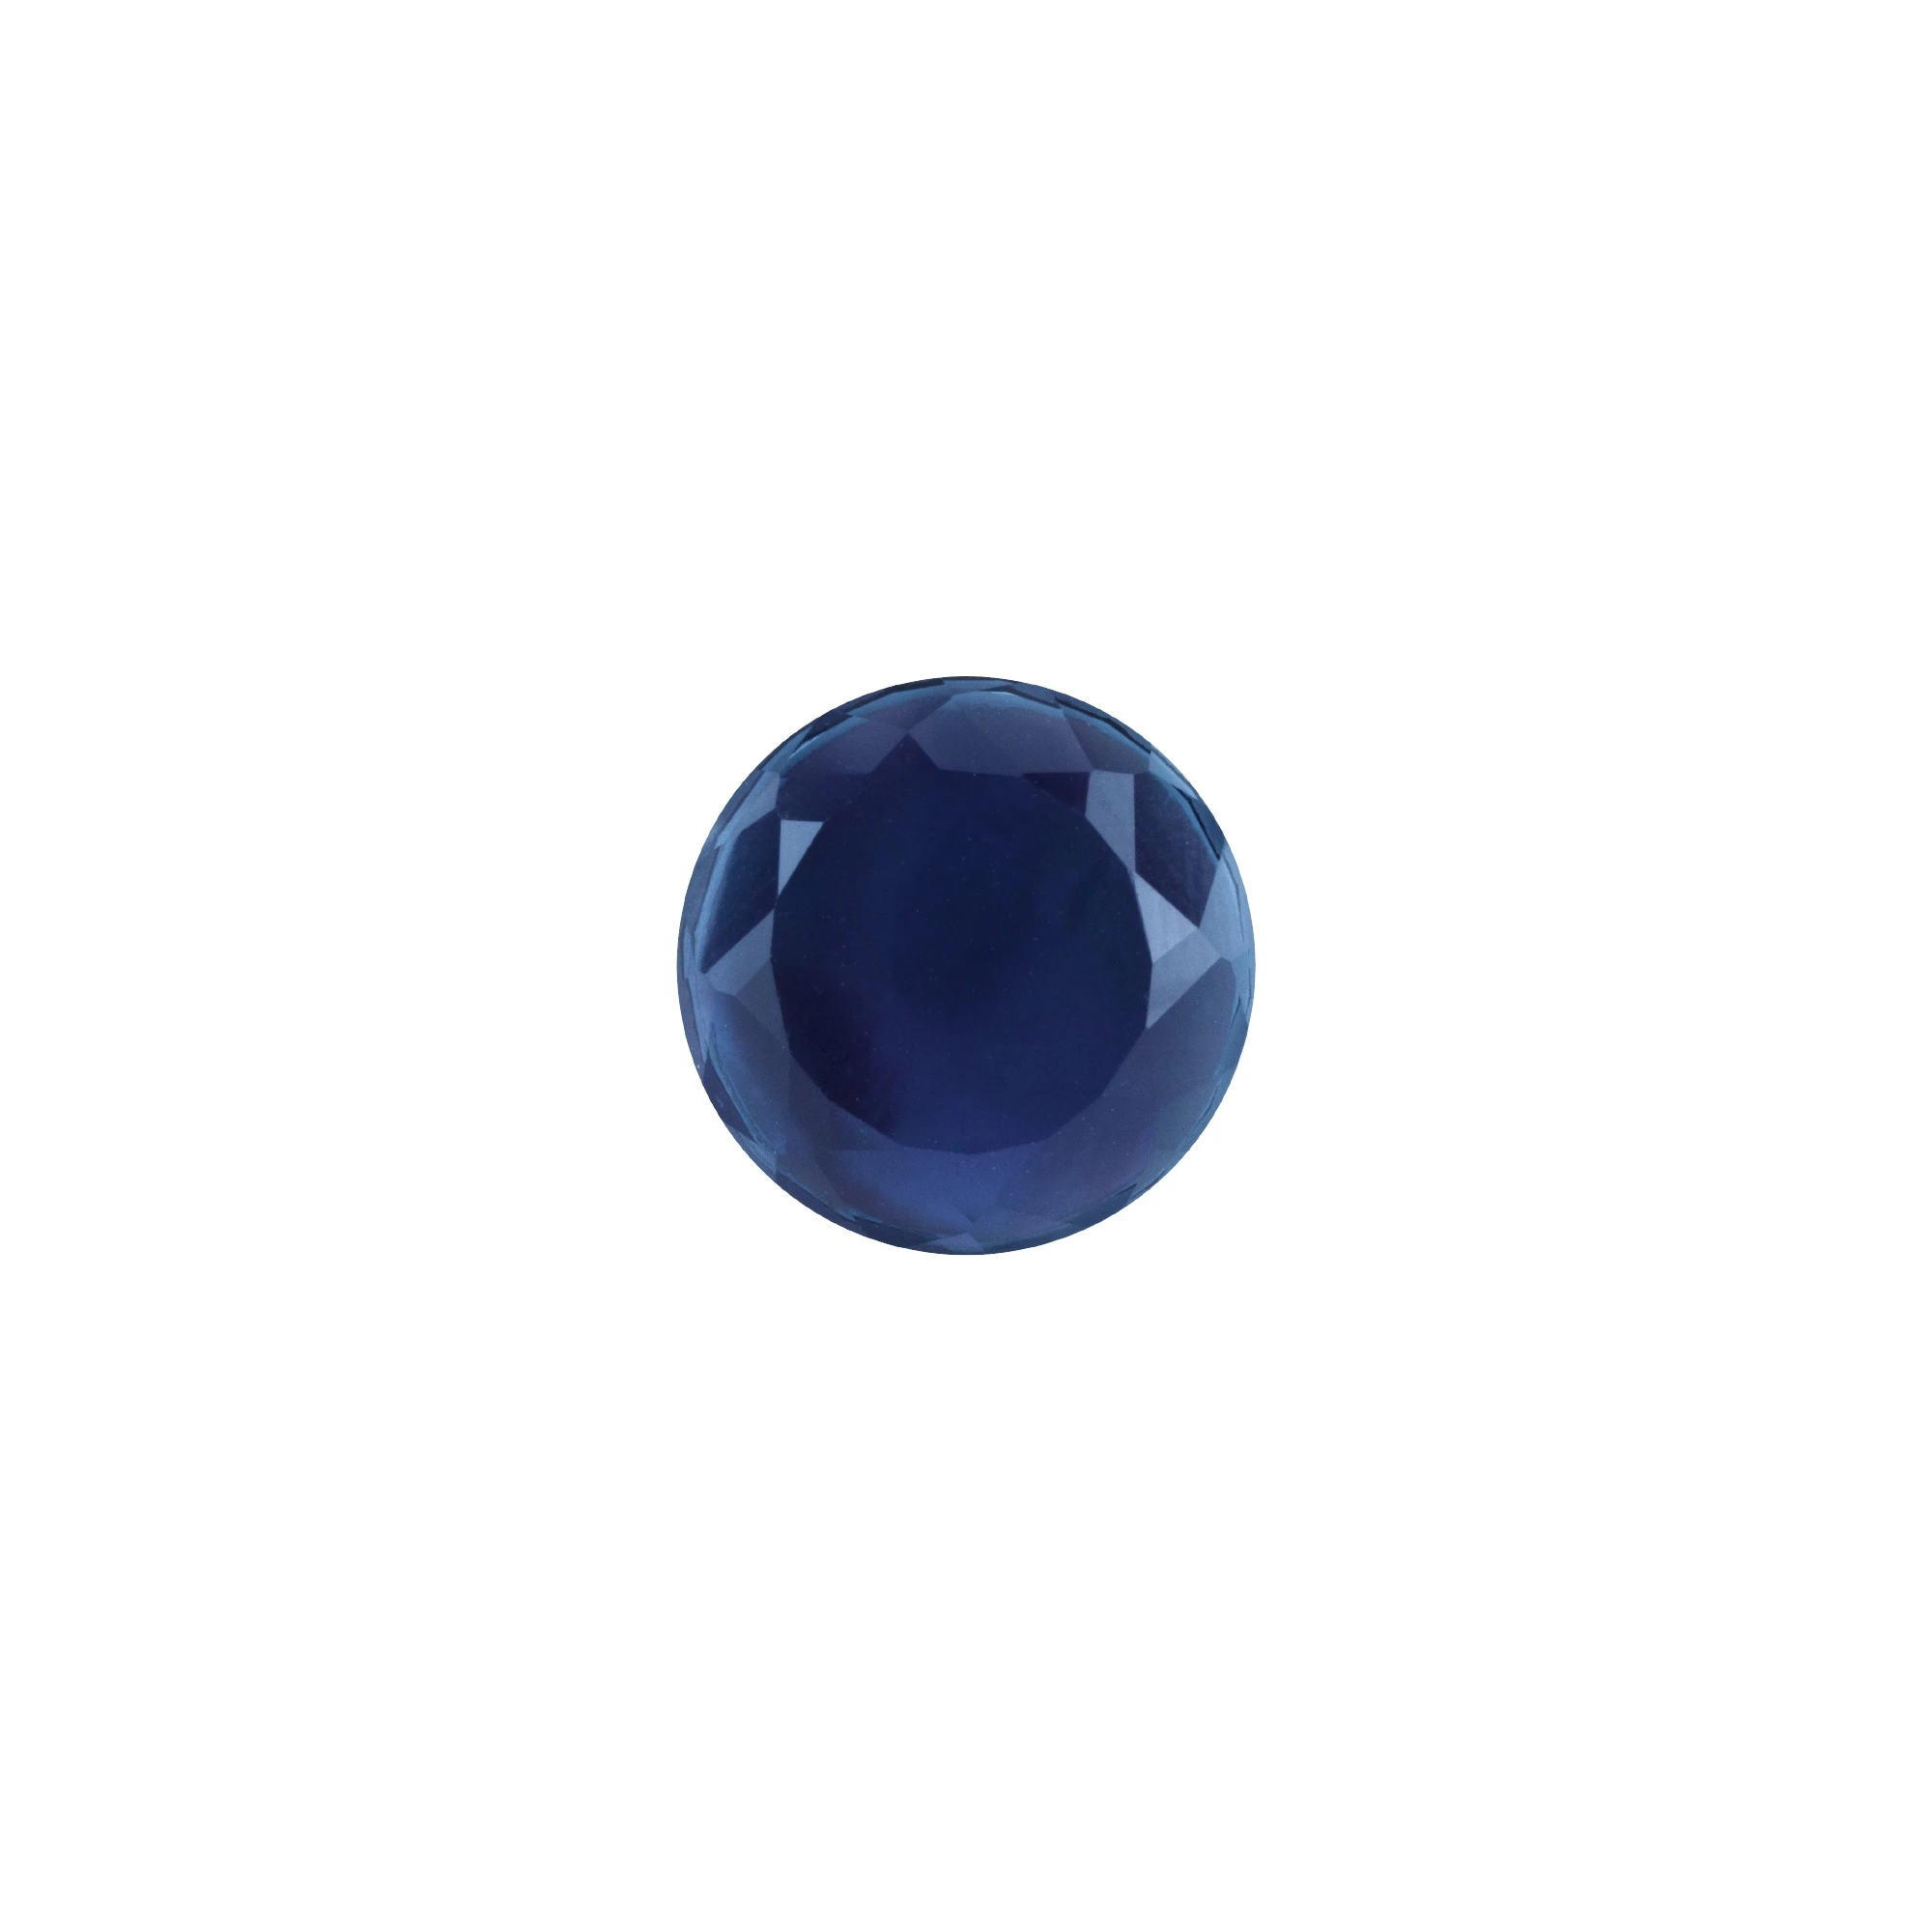 BREIL STONES - BLUE HYDROTHERMAL QUARTZ - 1 - TJ1999 | Breil